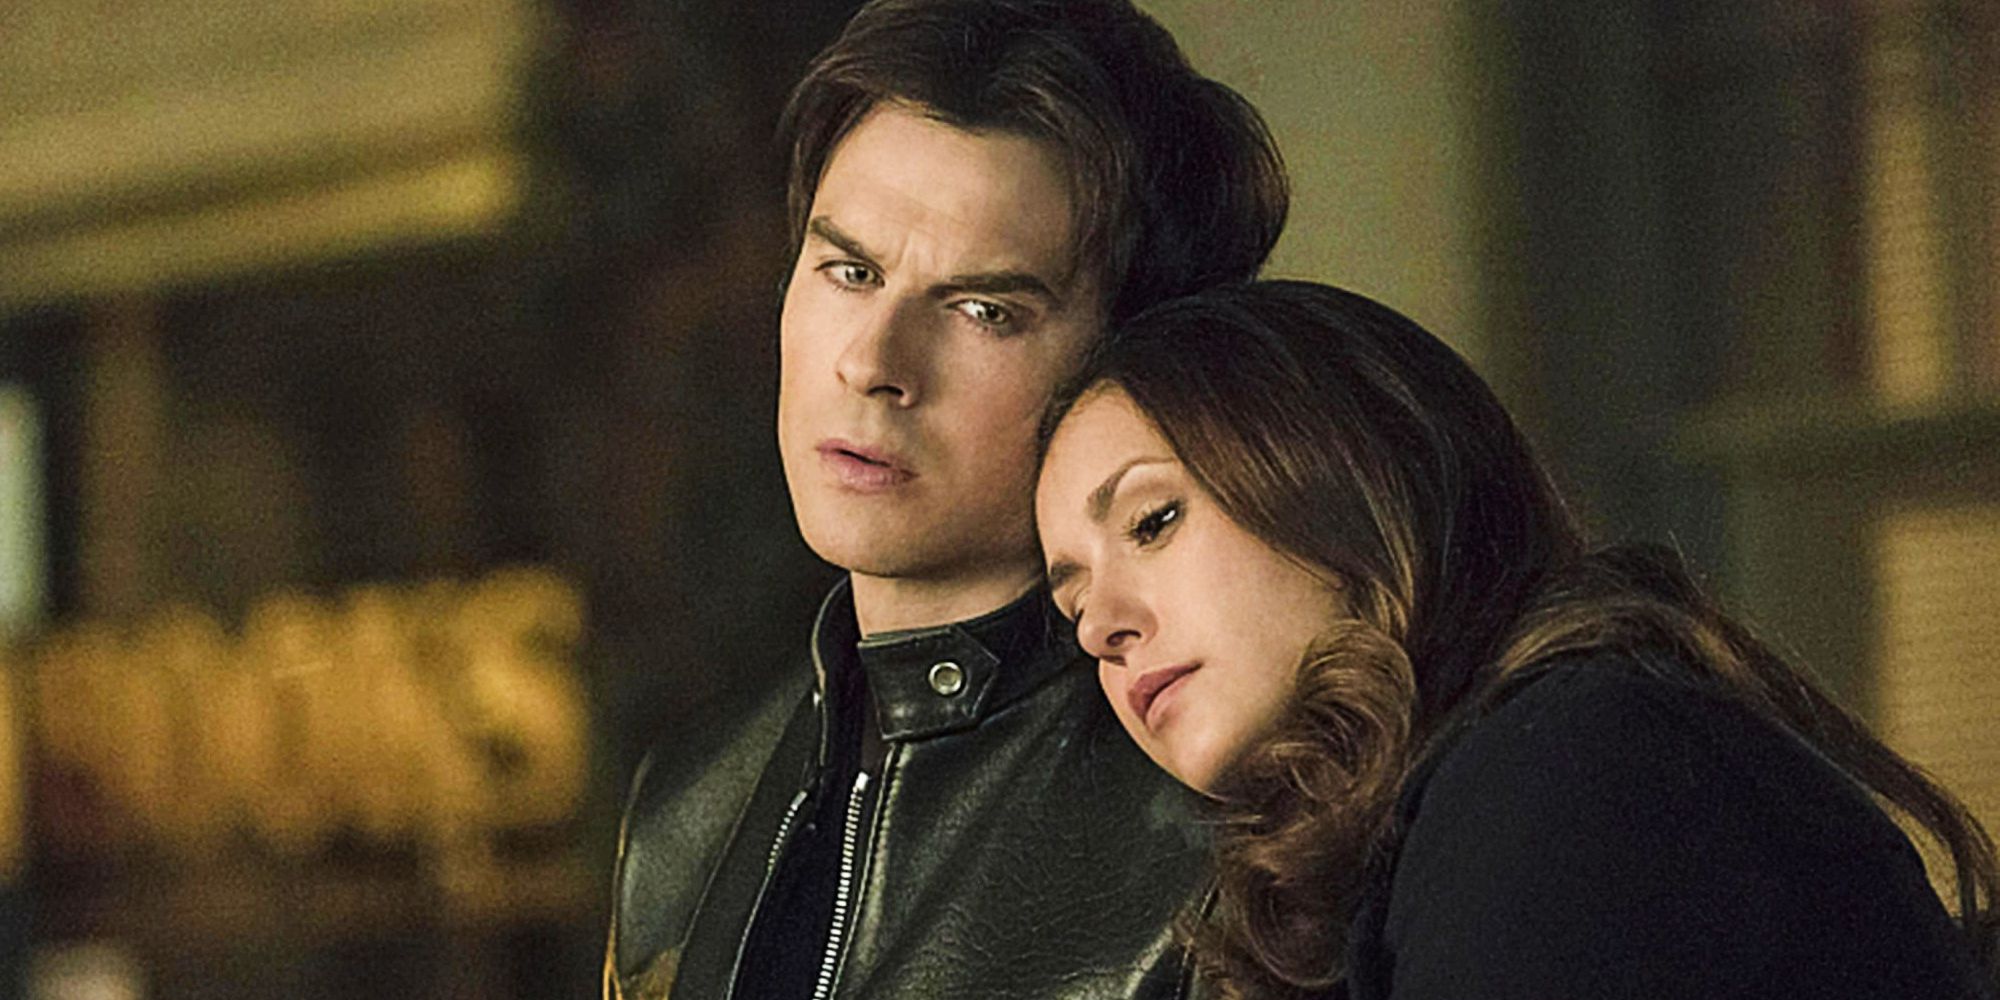 Elena descansando a cabeça no ombro de Damon em The Vampire Diaries